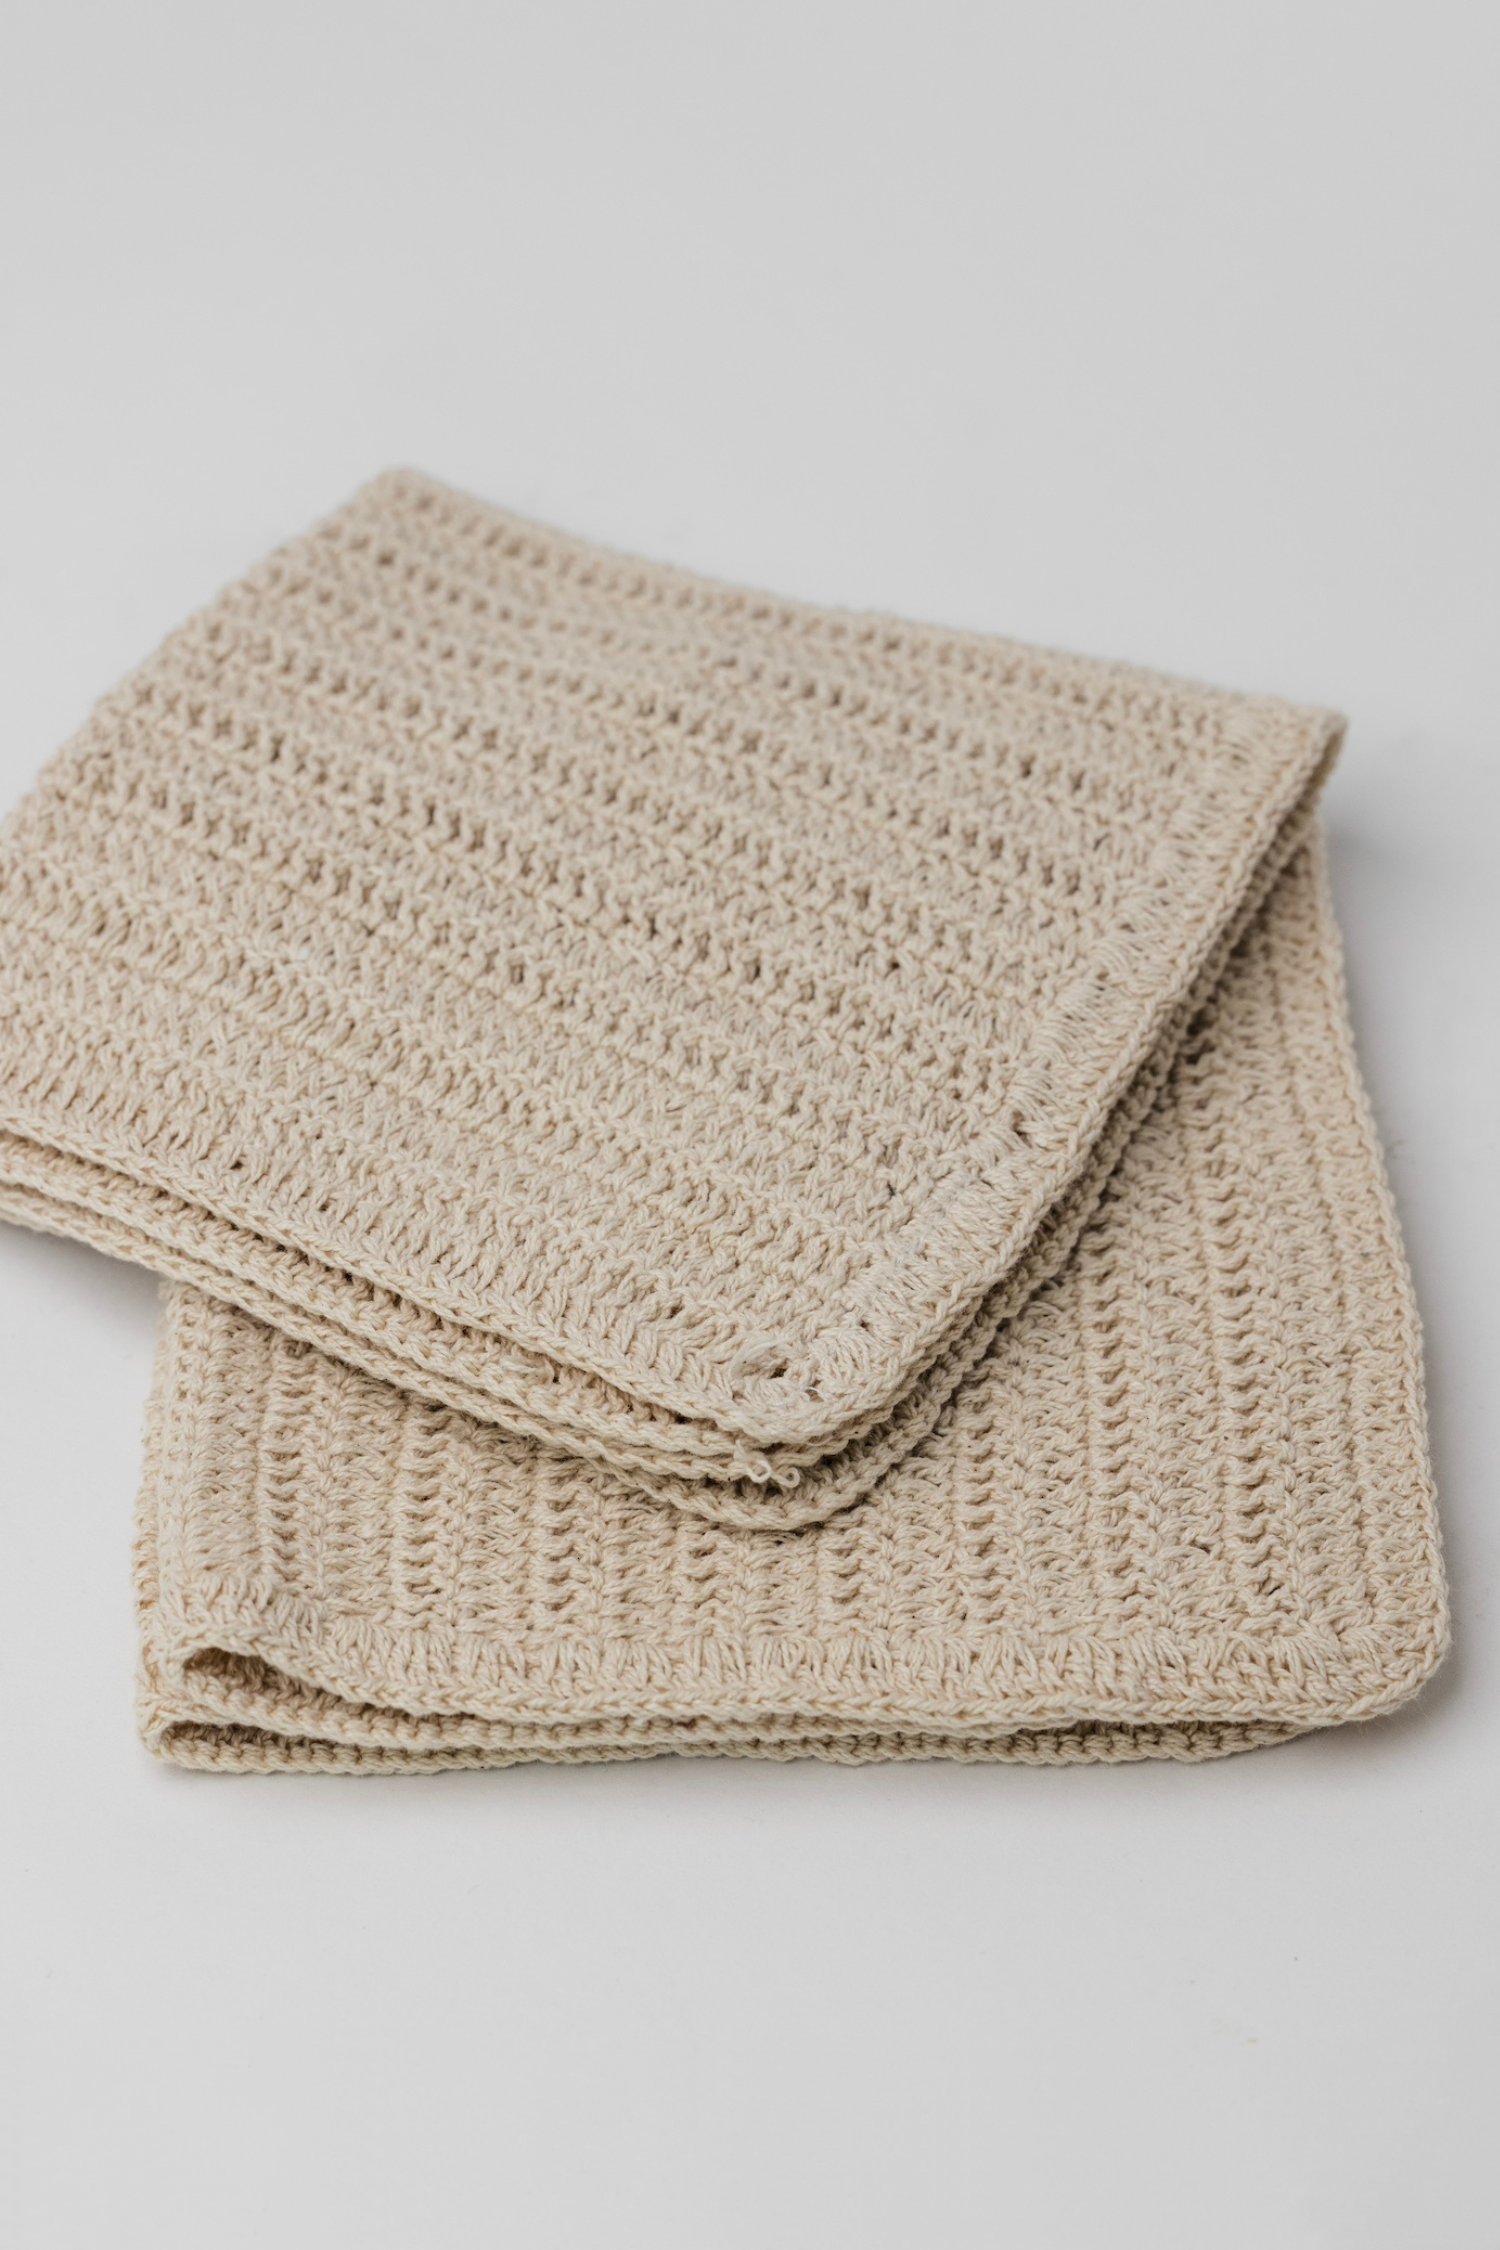 Tate Crochet Dish Towel - Set of 2 - Natural